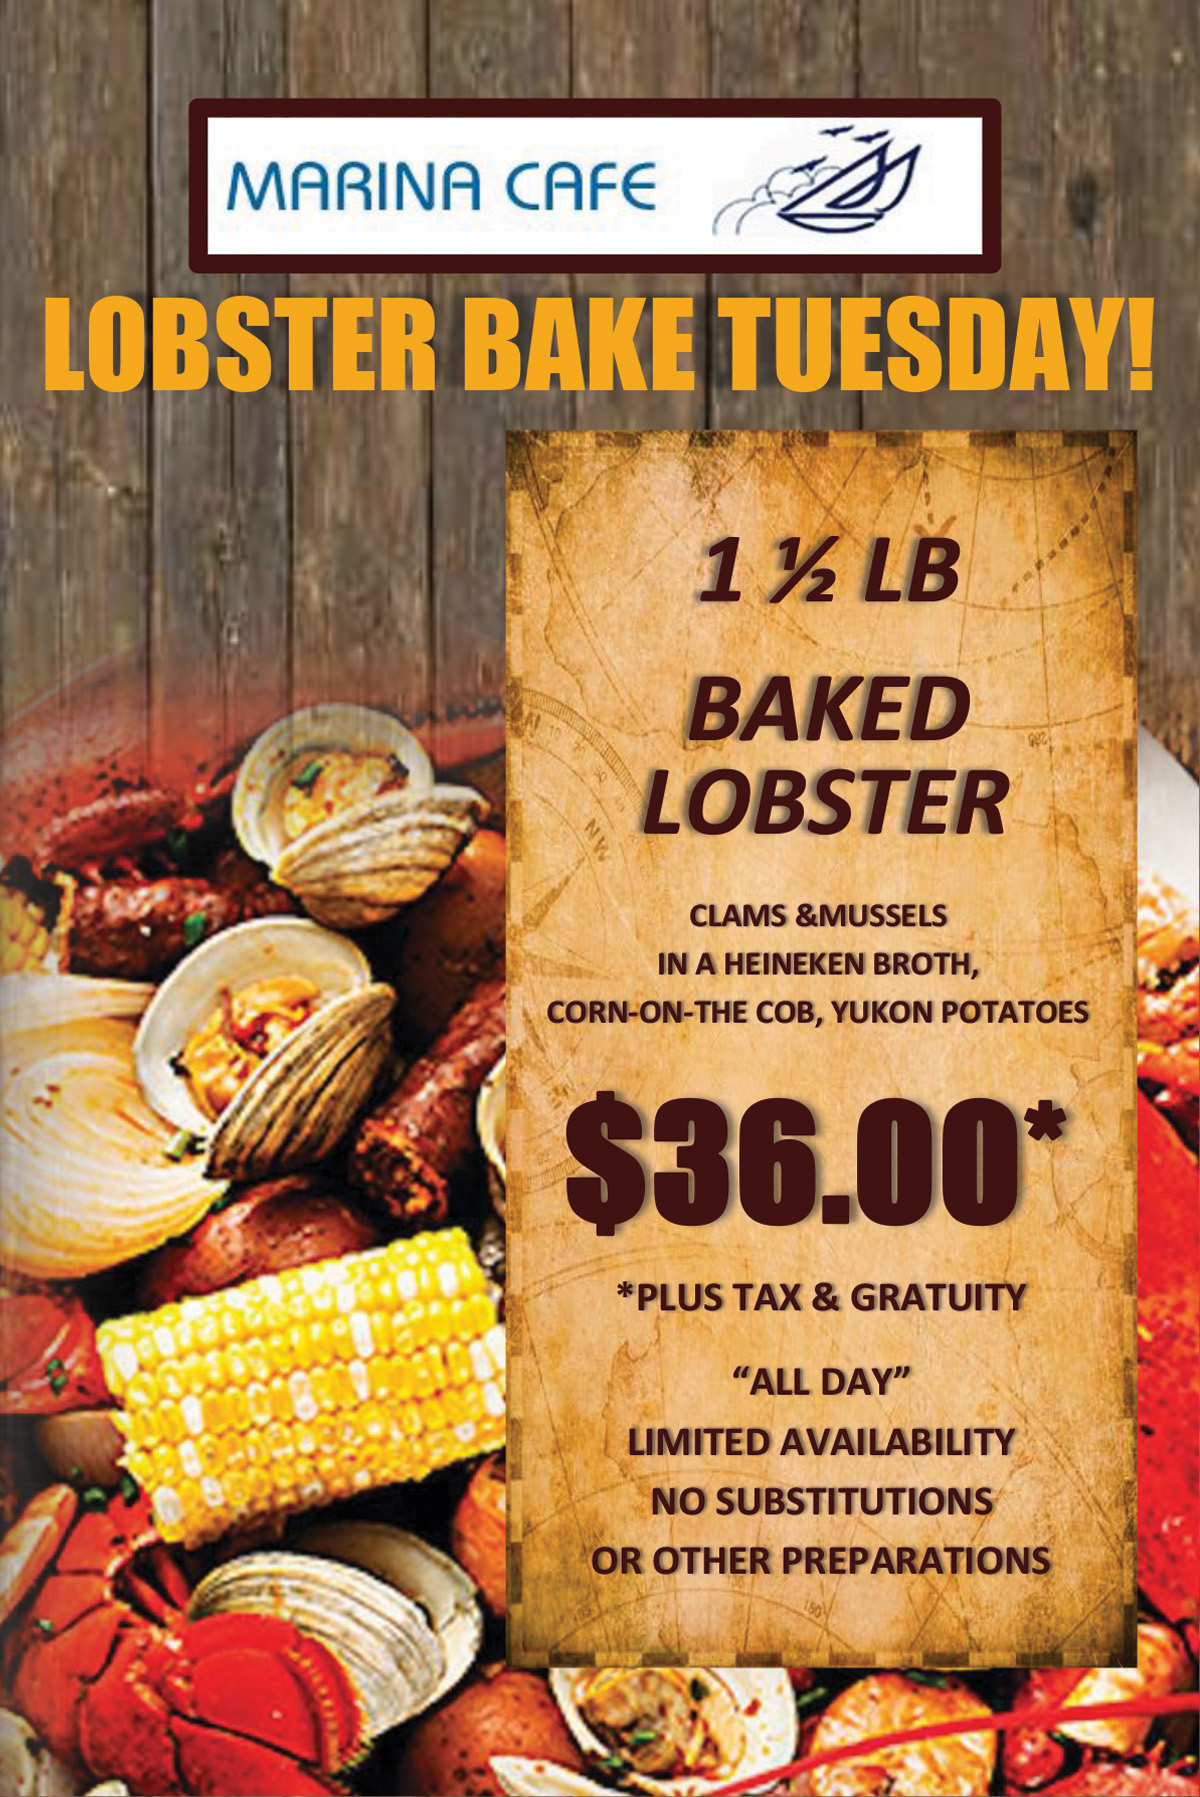 Lobster Bake Tuesday @ Marina Cafe - Lobster Bake on Staten Island